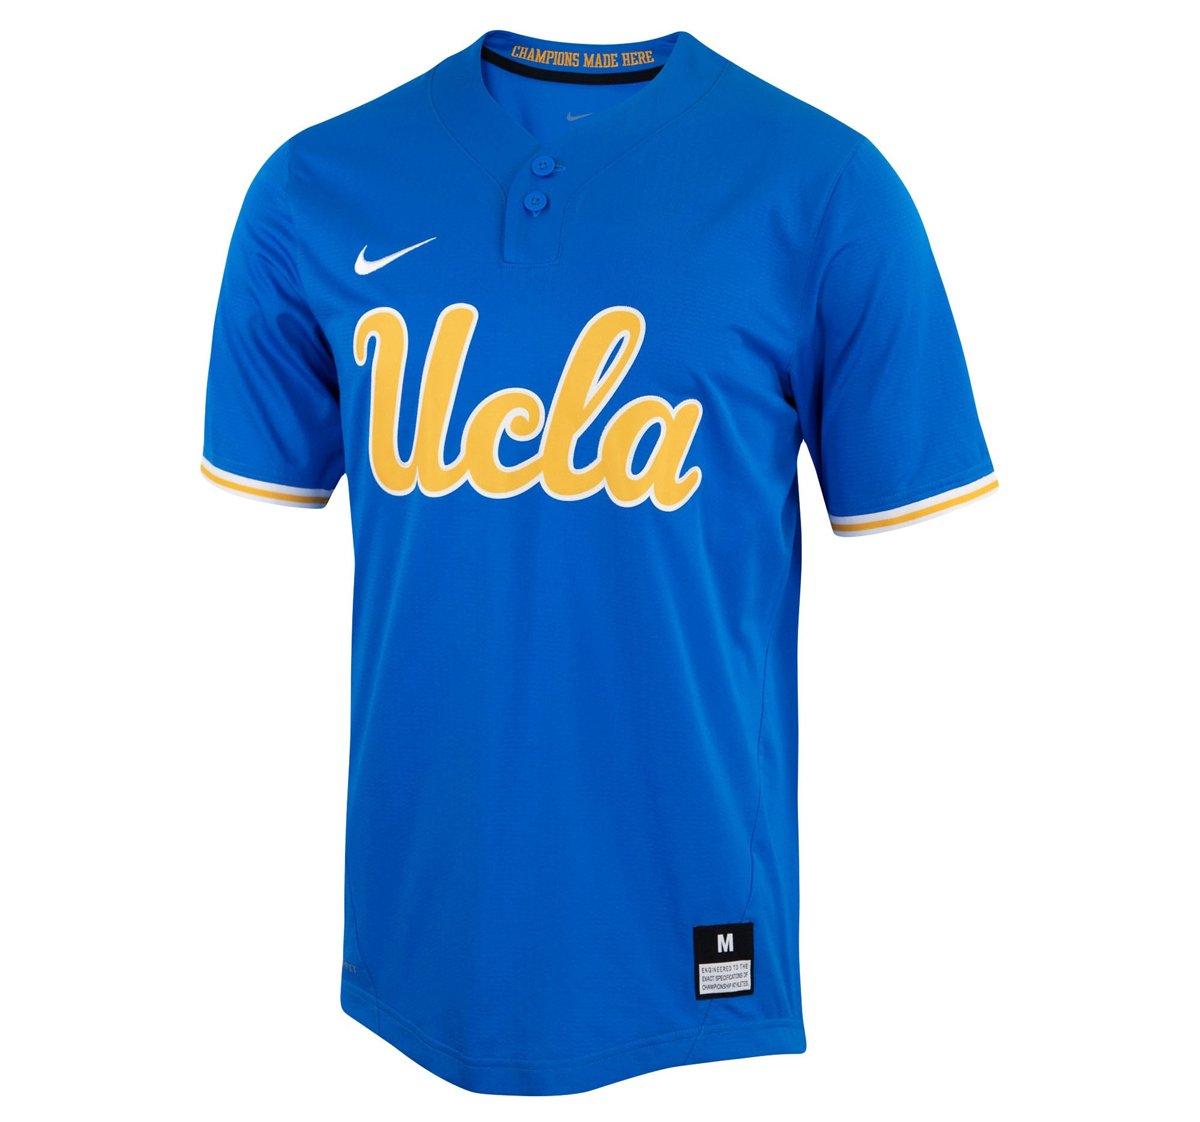 UCLA-Nike-Dunk-Low-Jersey